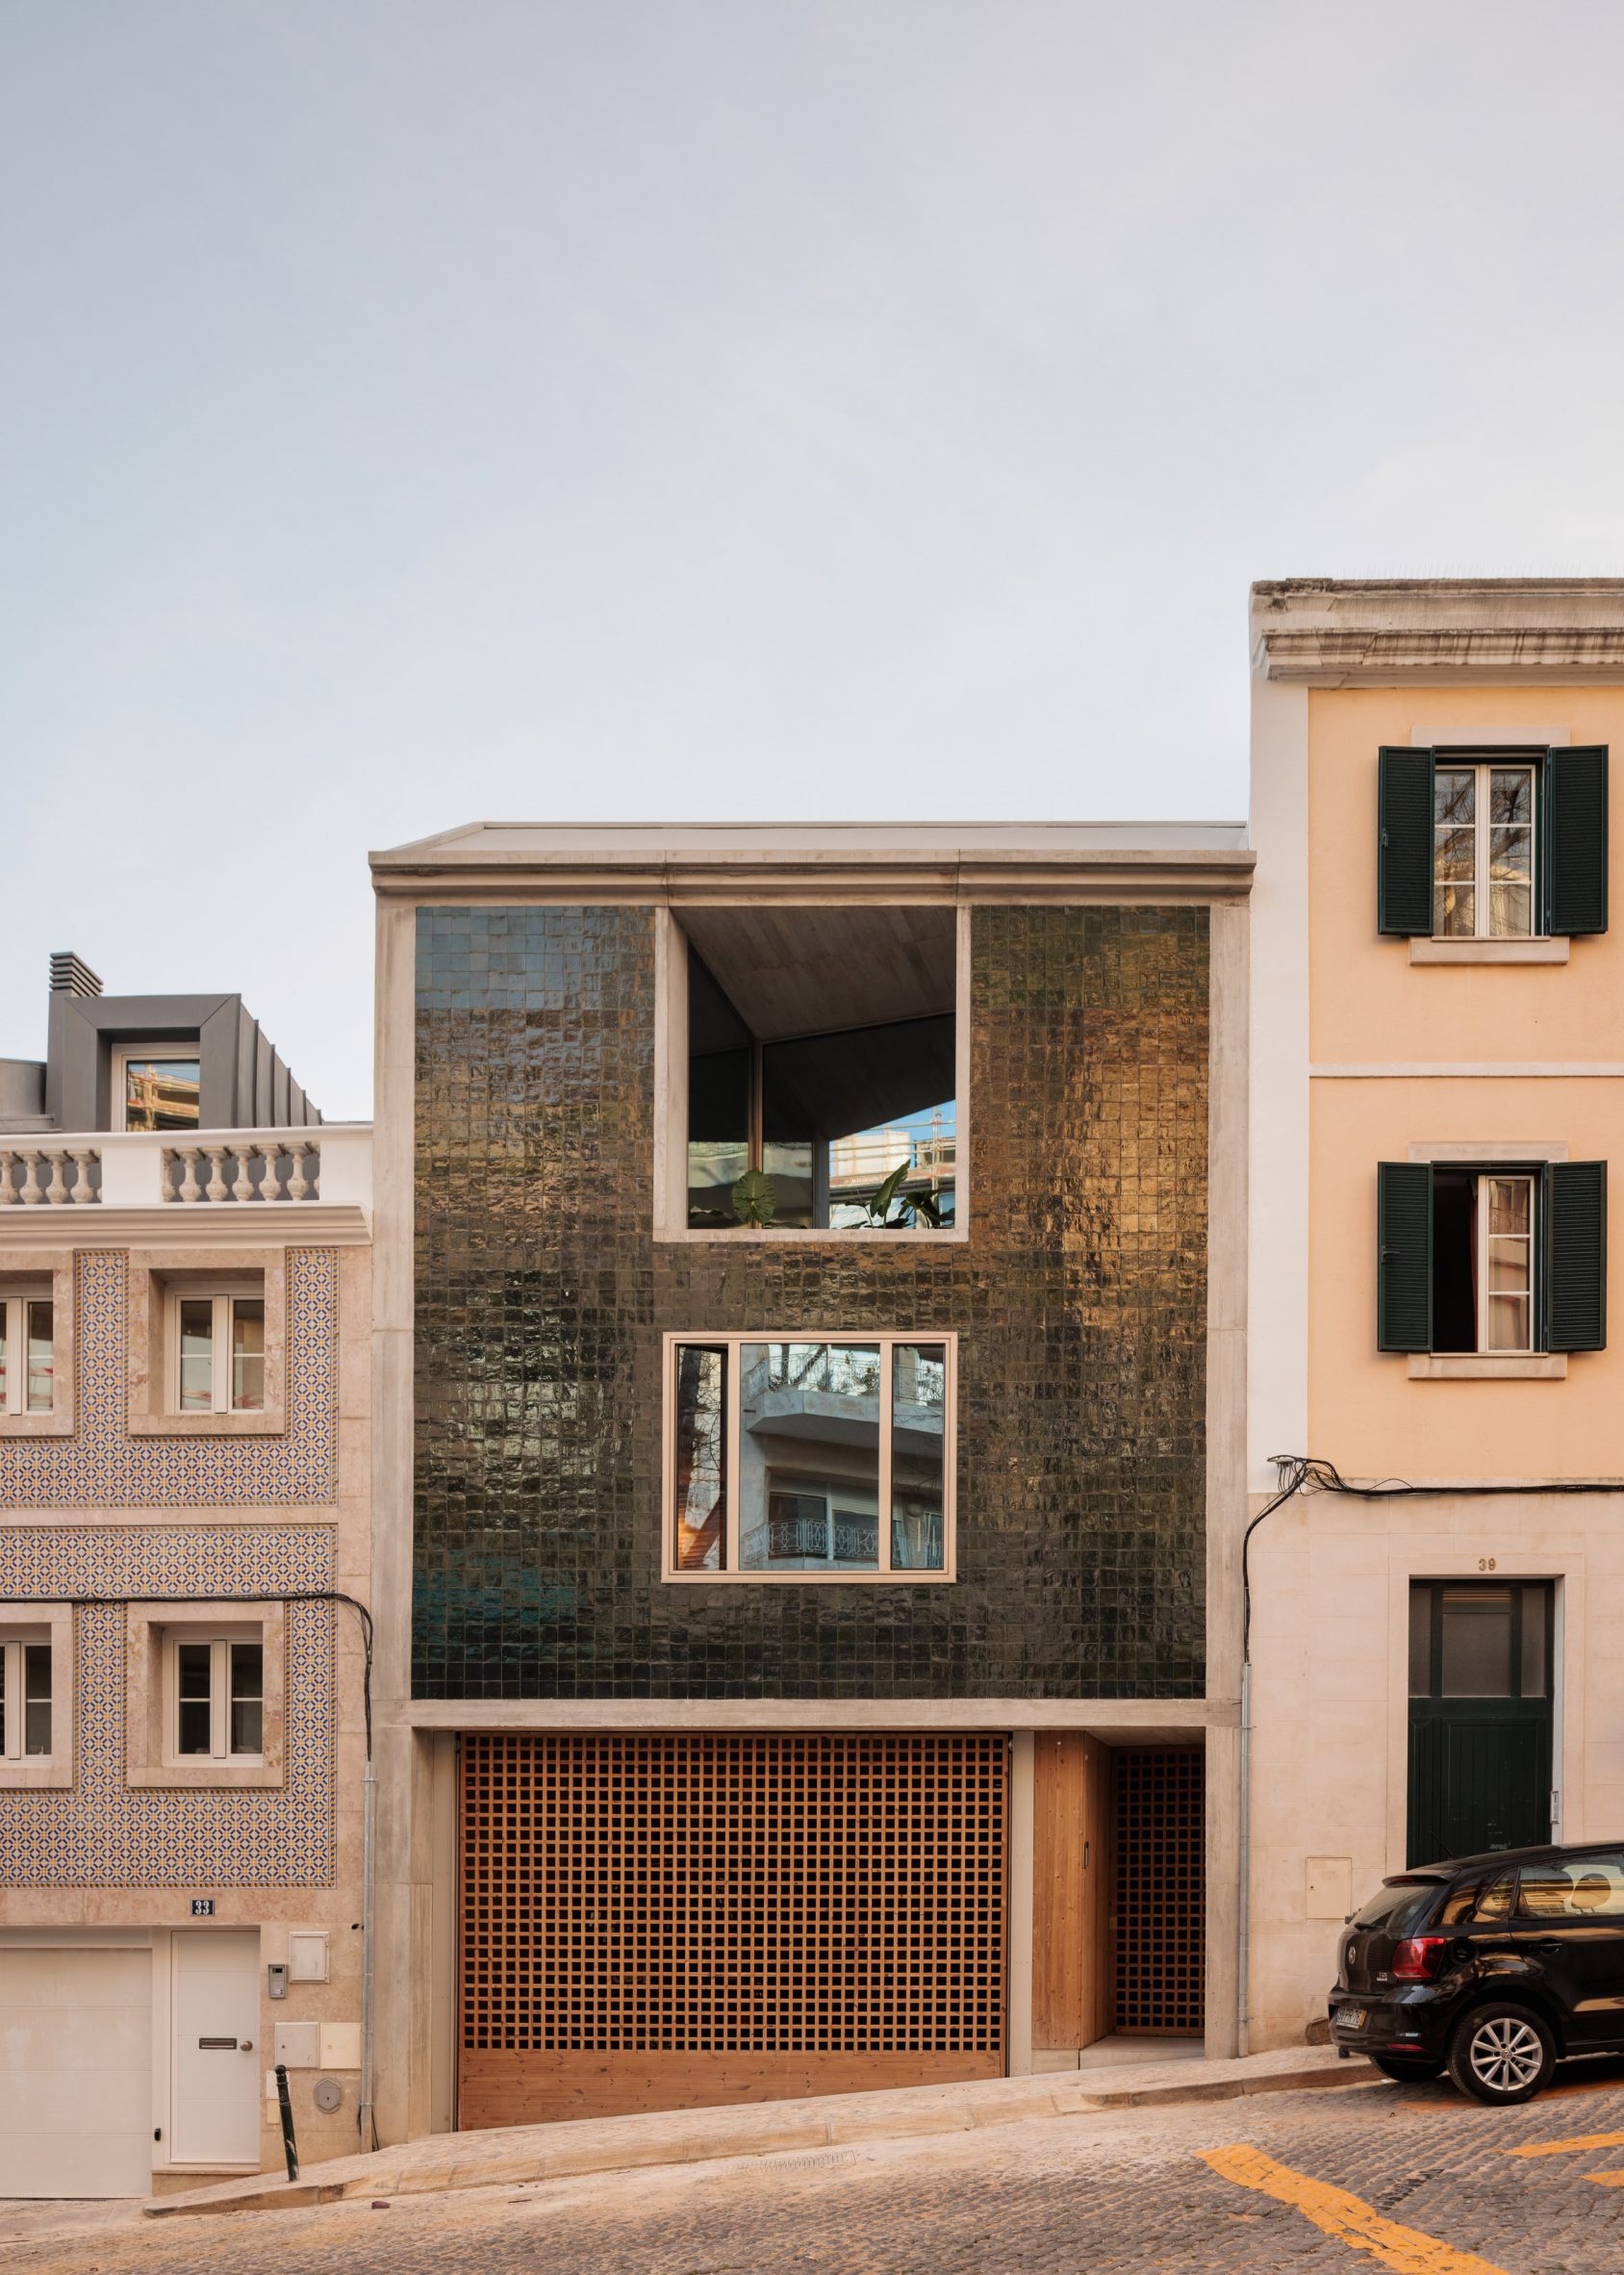 Concrete house decorated in green tiles in Lisbon by Bak Gordon Arquitectos